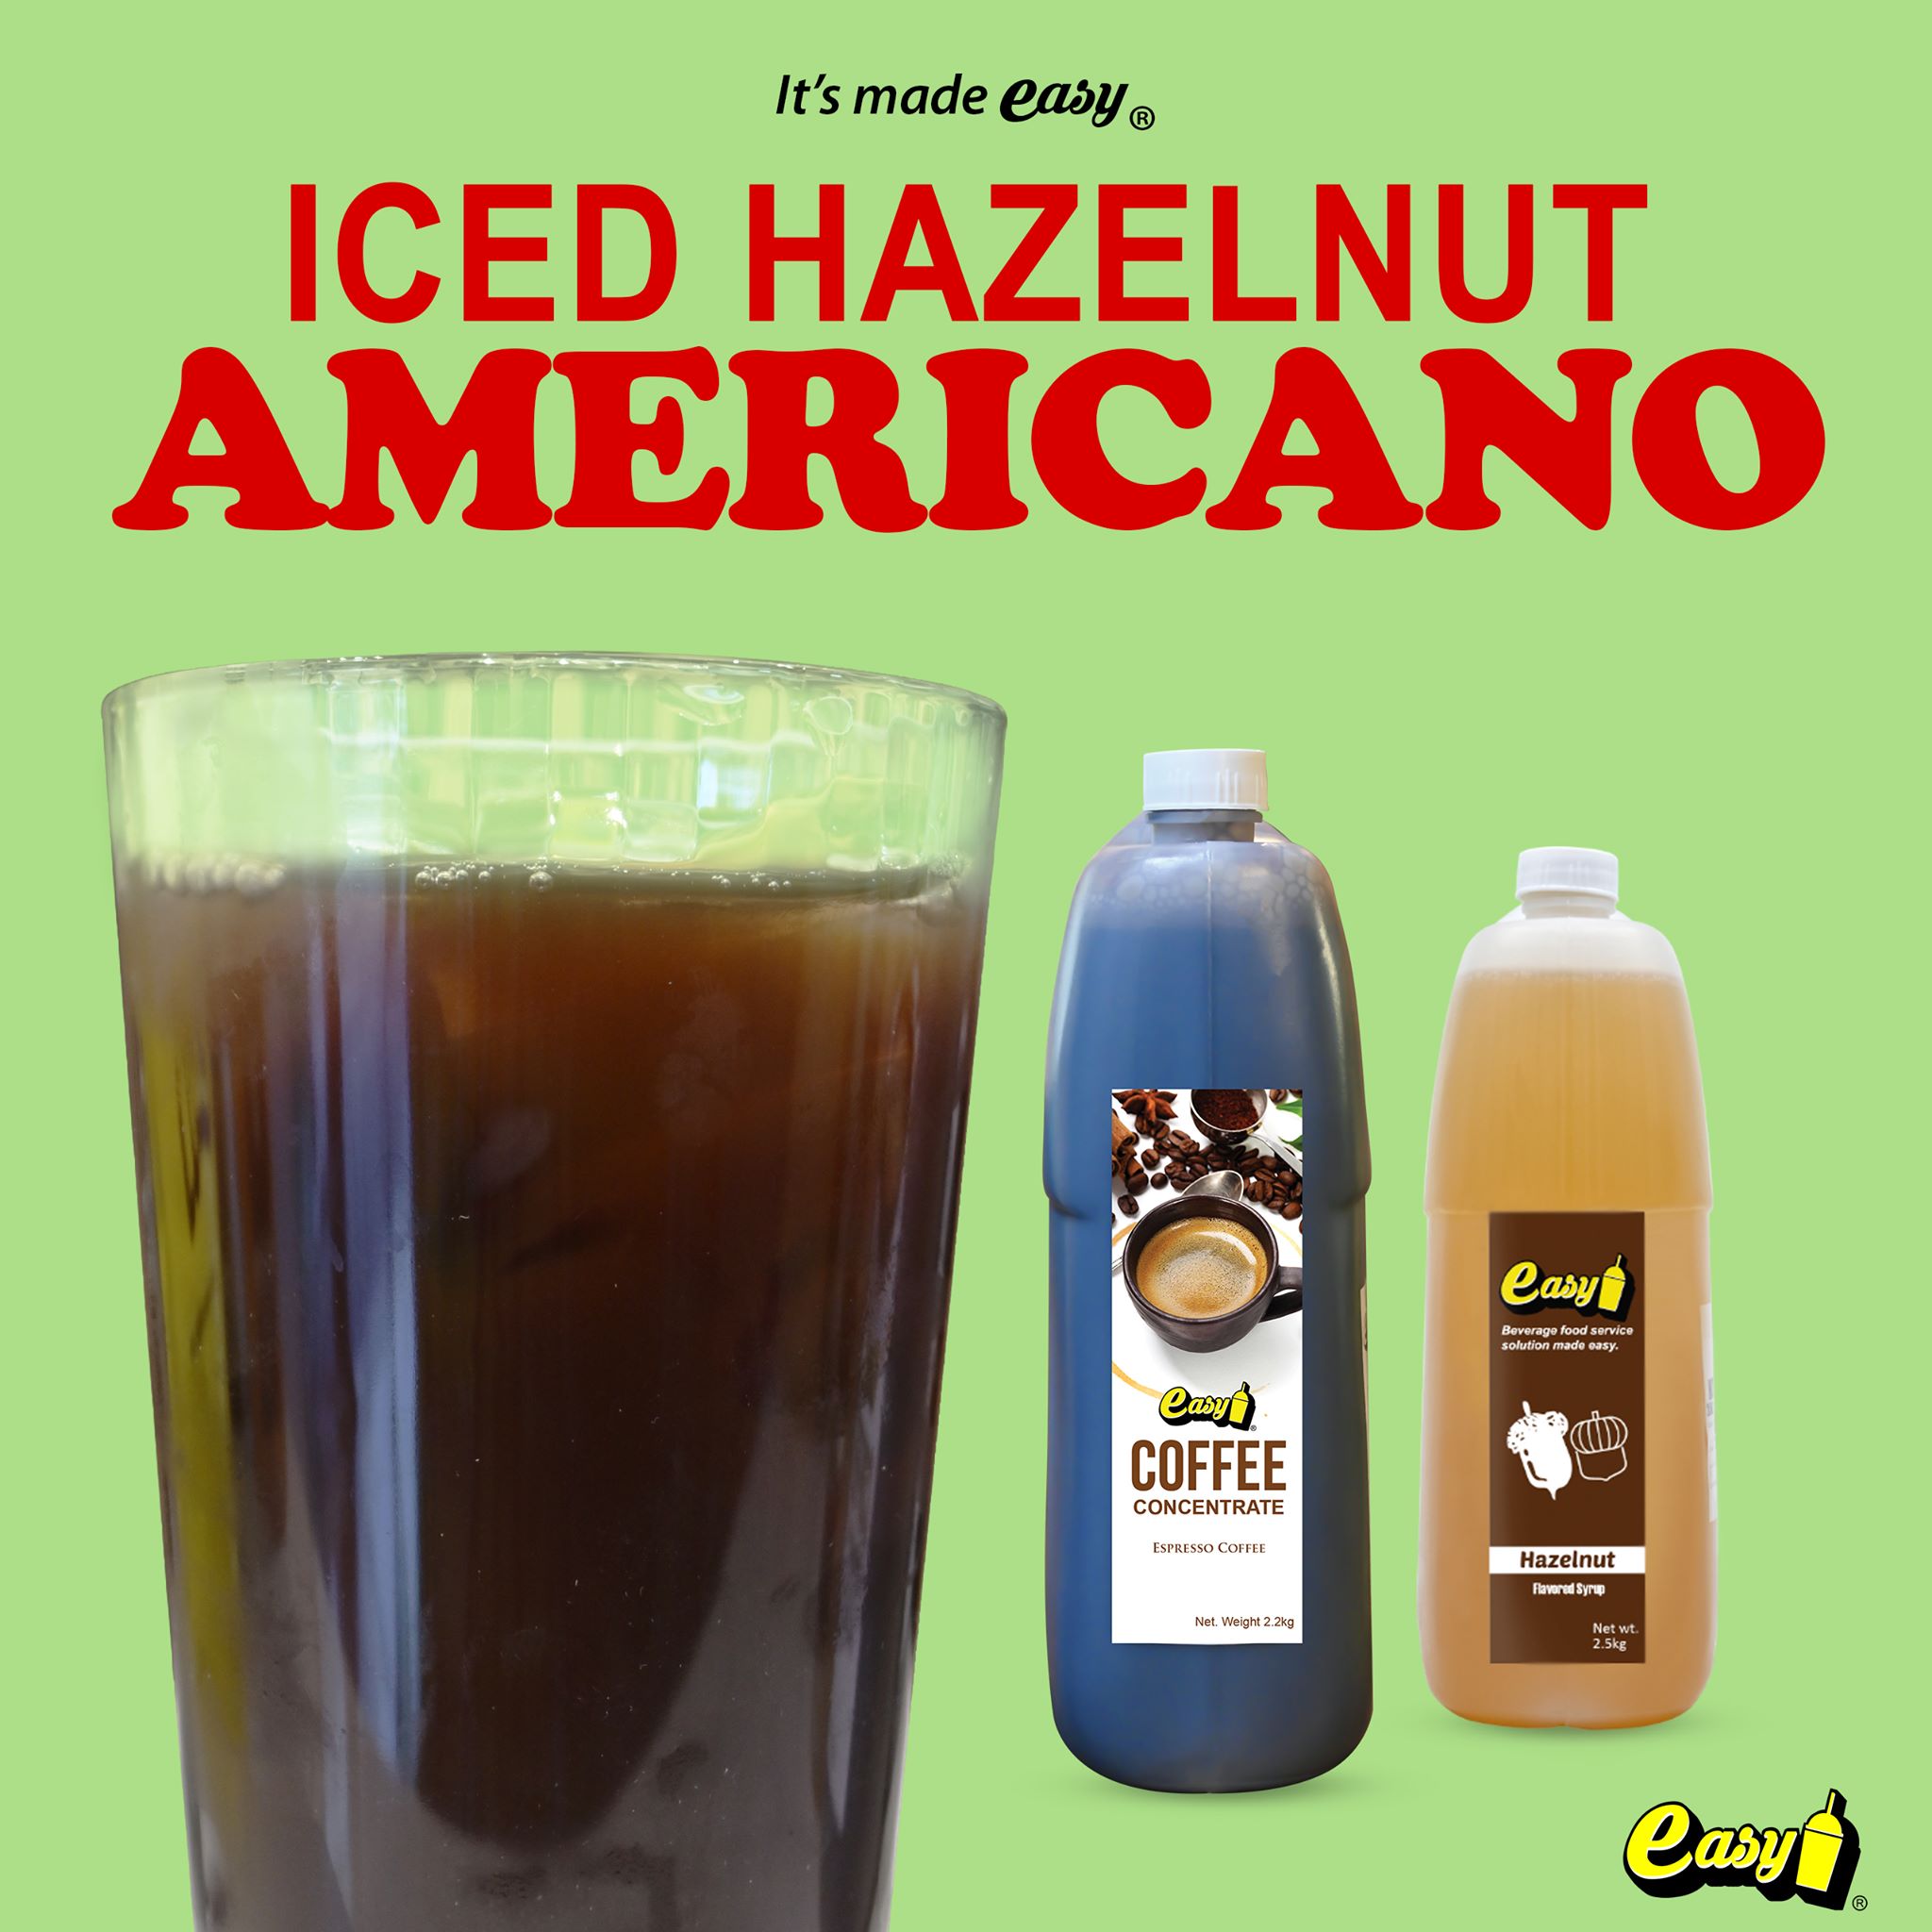 Iced Hazelnut Americano